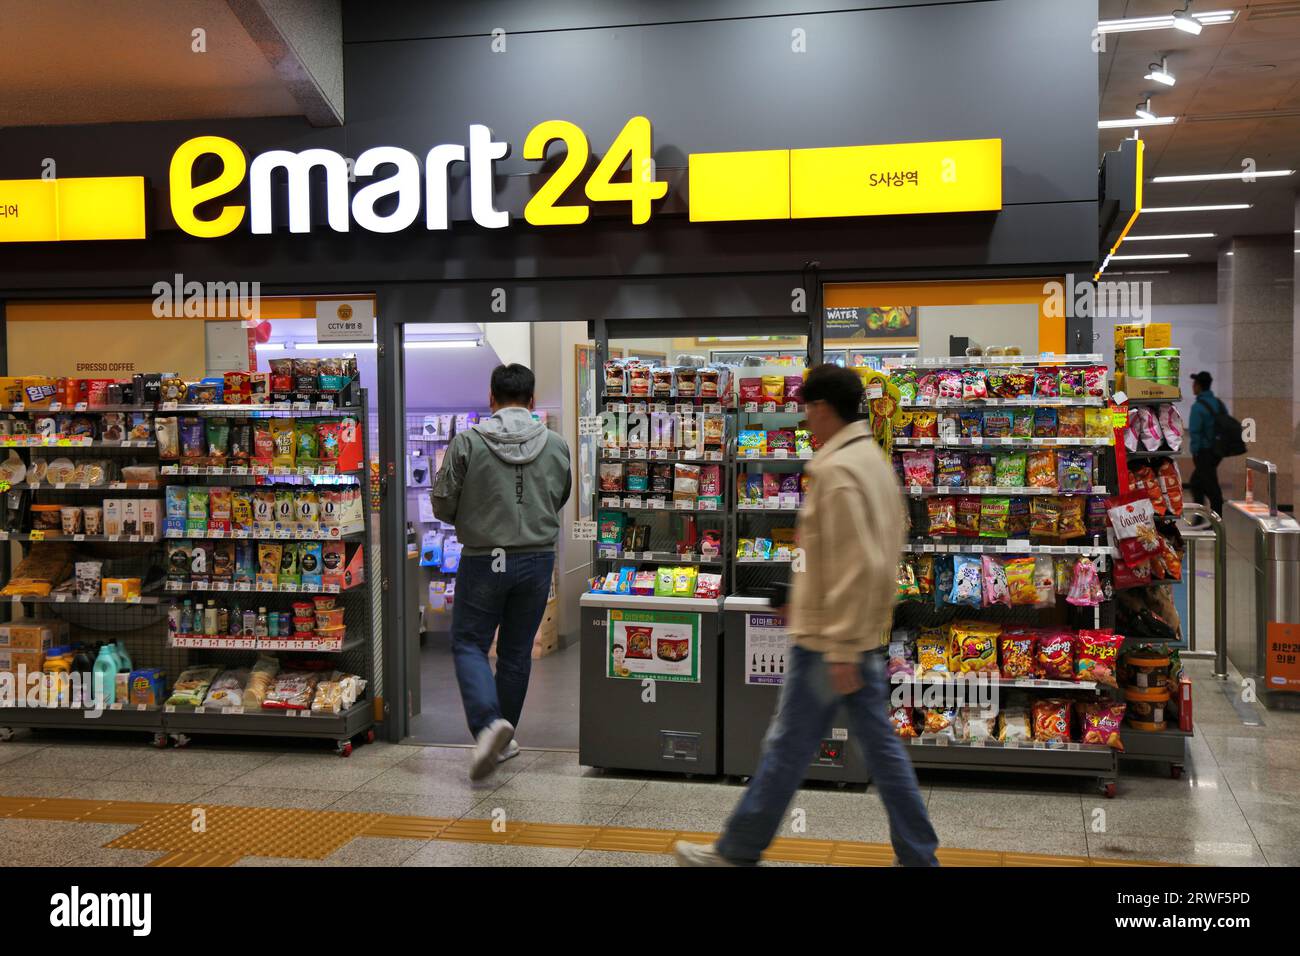 E-Mart to launch Korean version of Japan's discount retailer Don